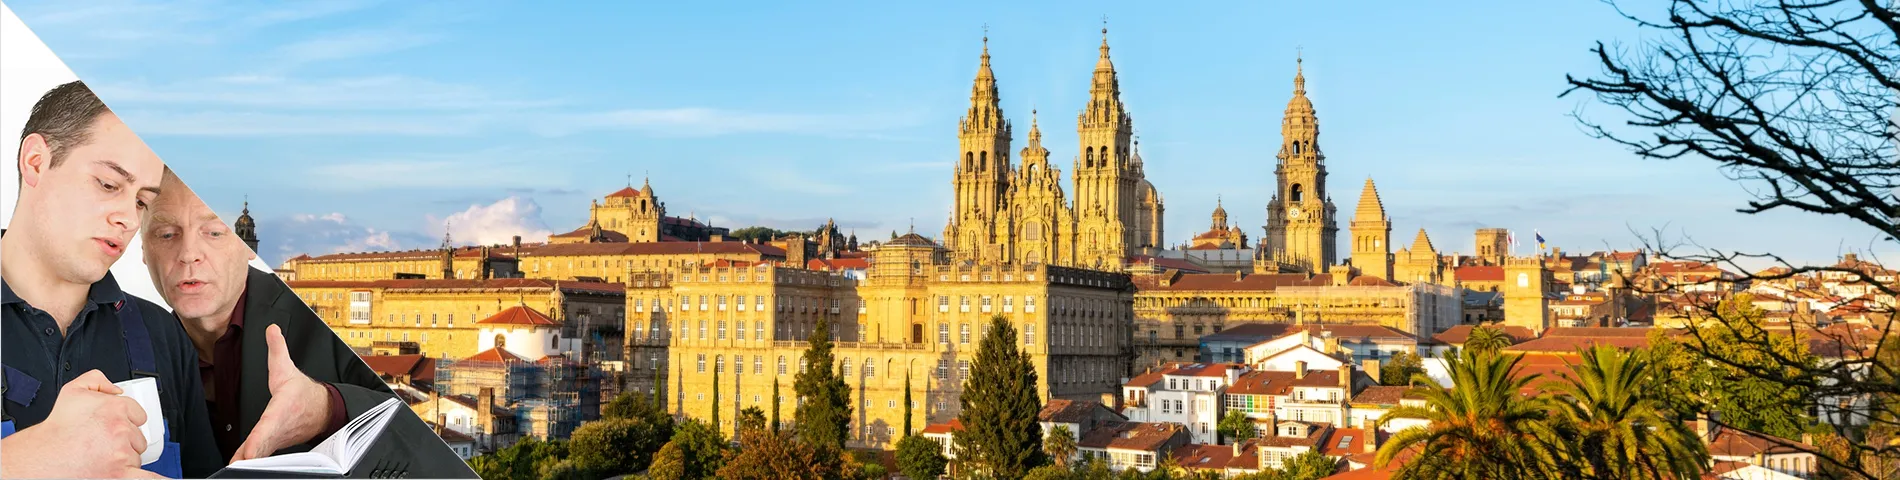 Santiago de Compostela - Einzelunterricht